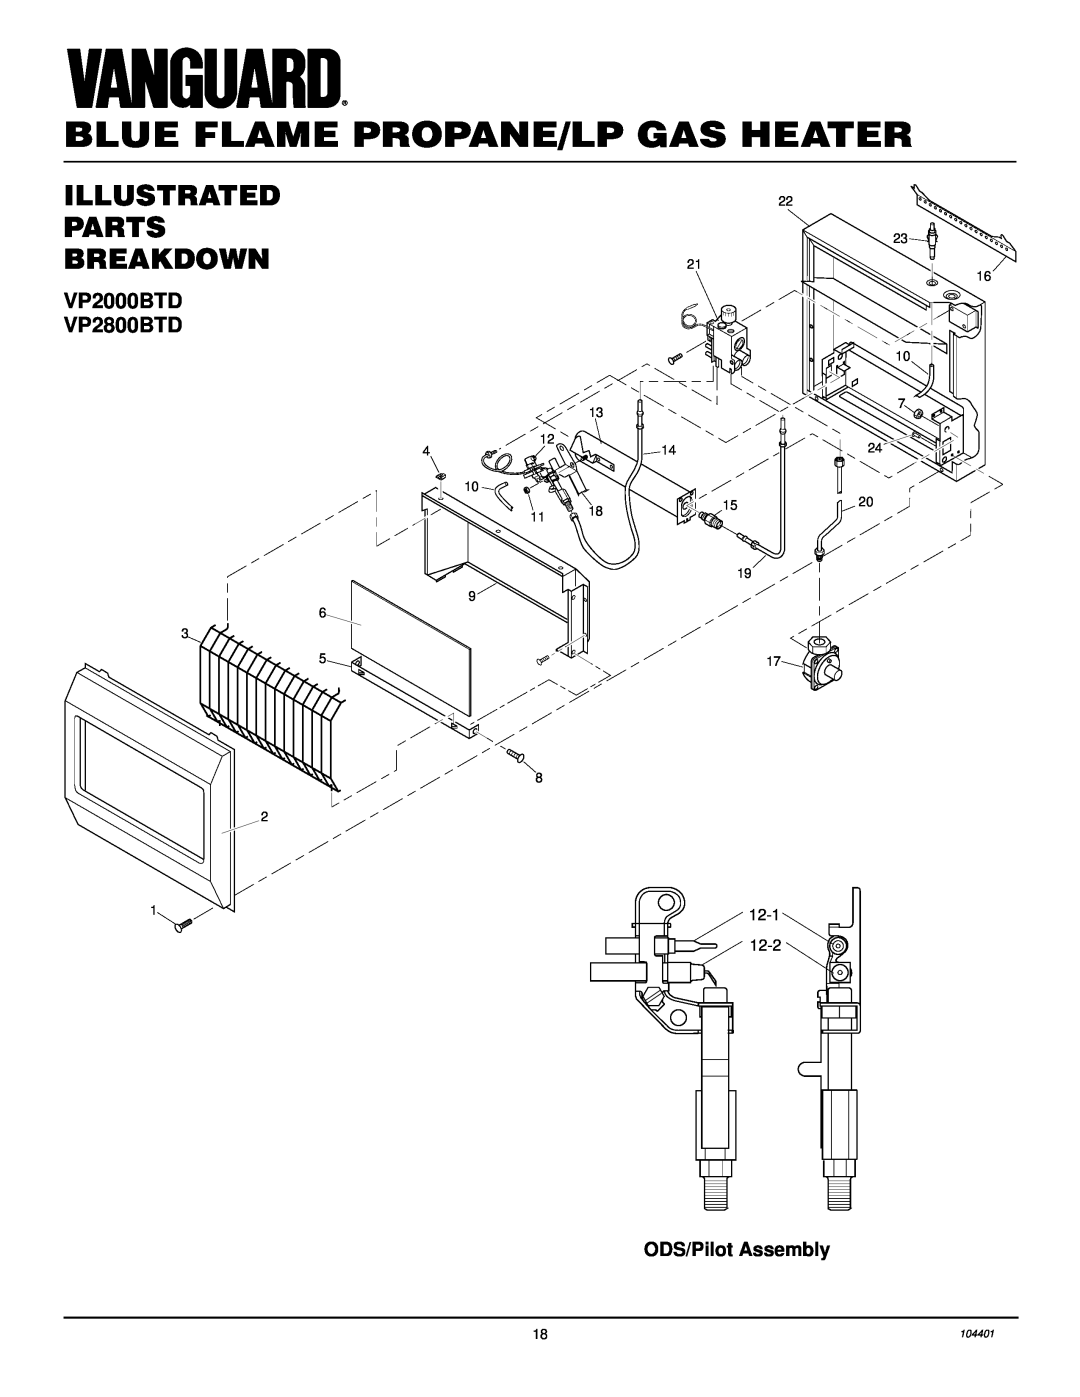 Vanguard Heating Illustrated Parts Breakdown, VP2000BTD VP2800BTD, ODS/Pilot Assembly, Blue Flame Propane/Lp Gas Heater 